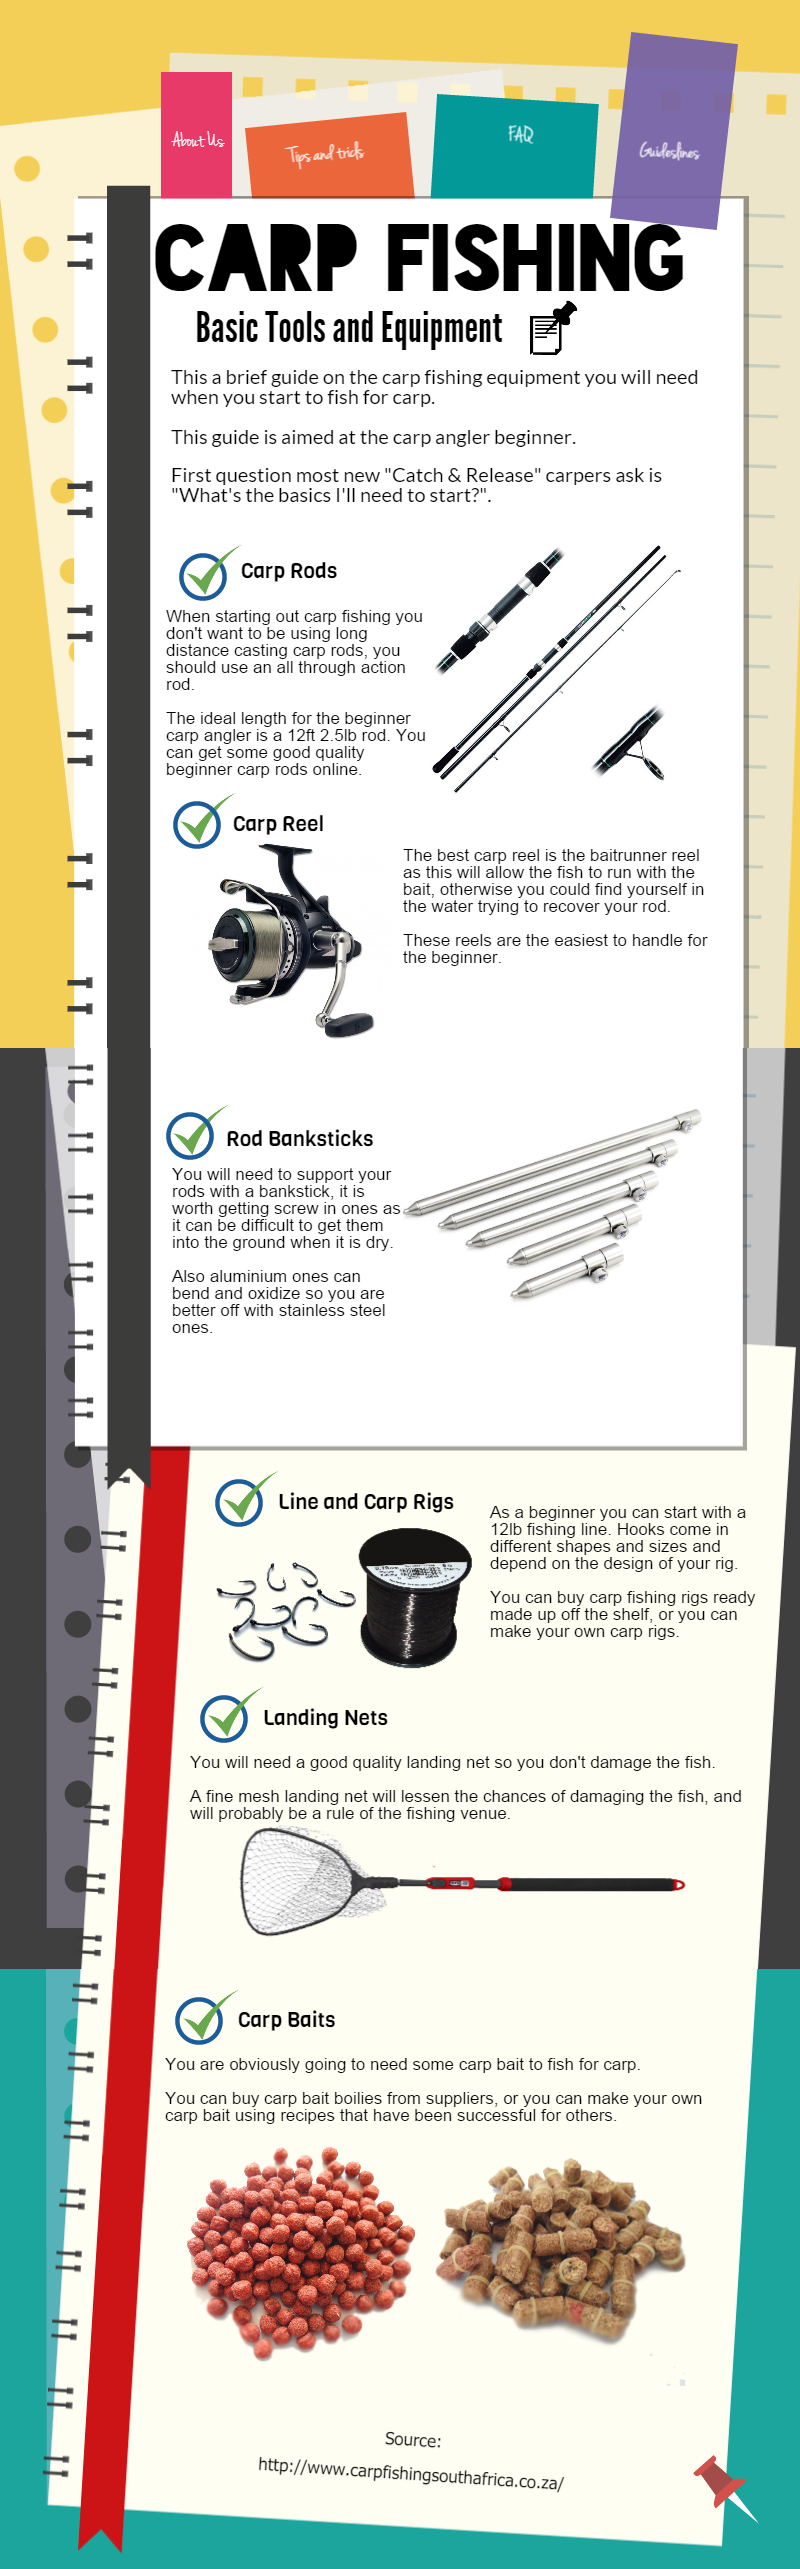 Carp Fishing Tools And Equipment Infographic